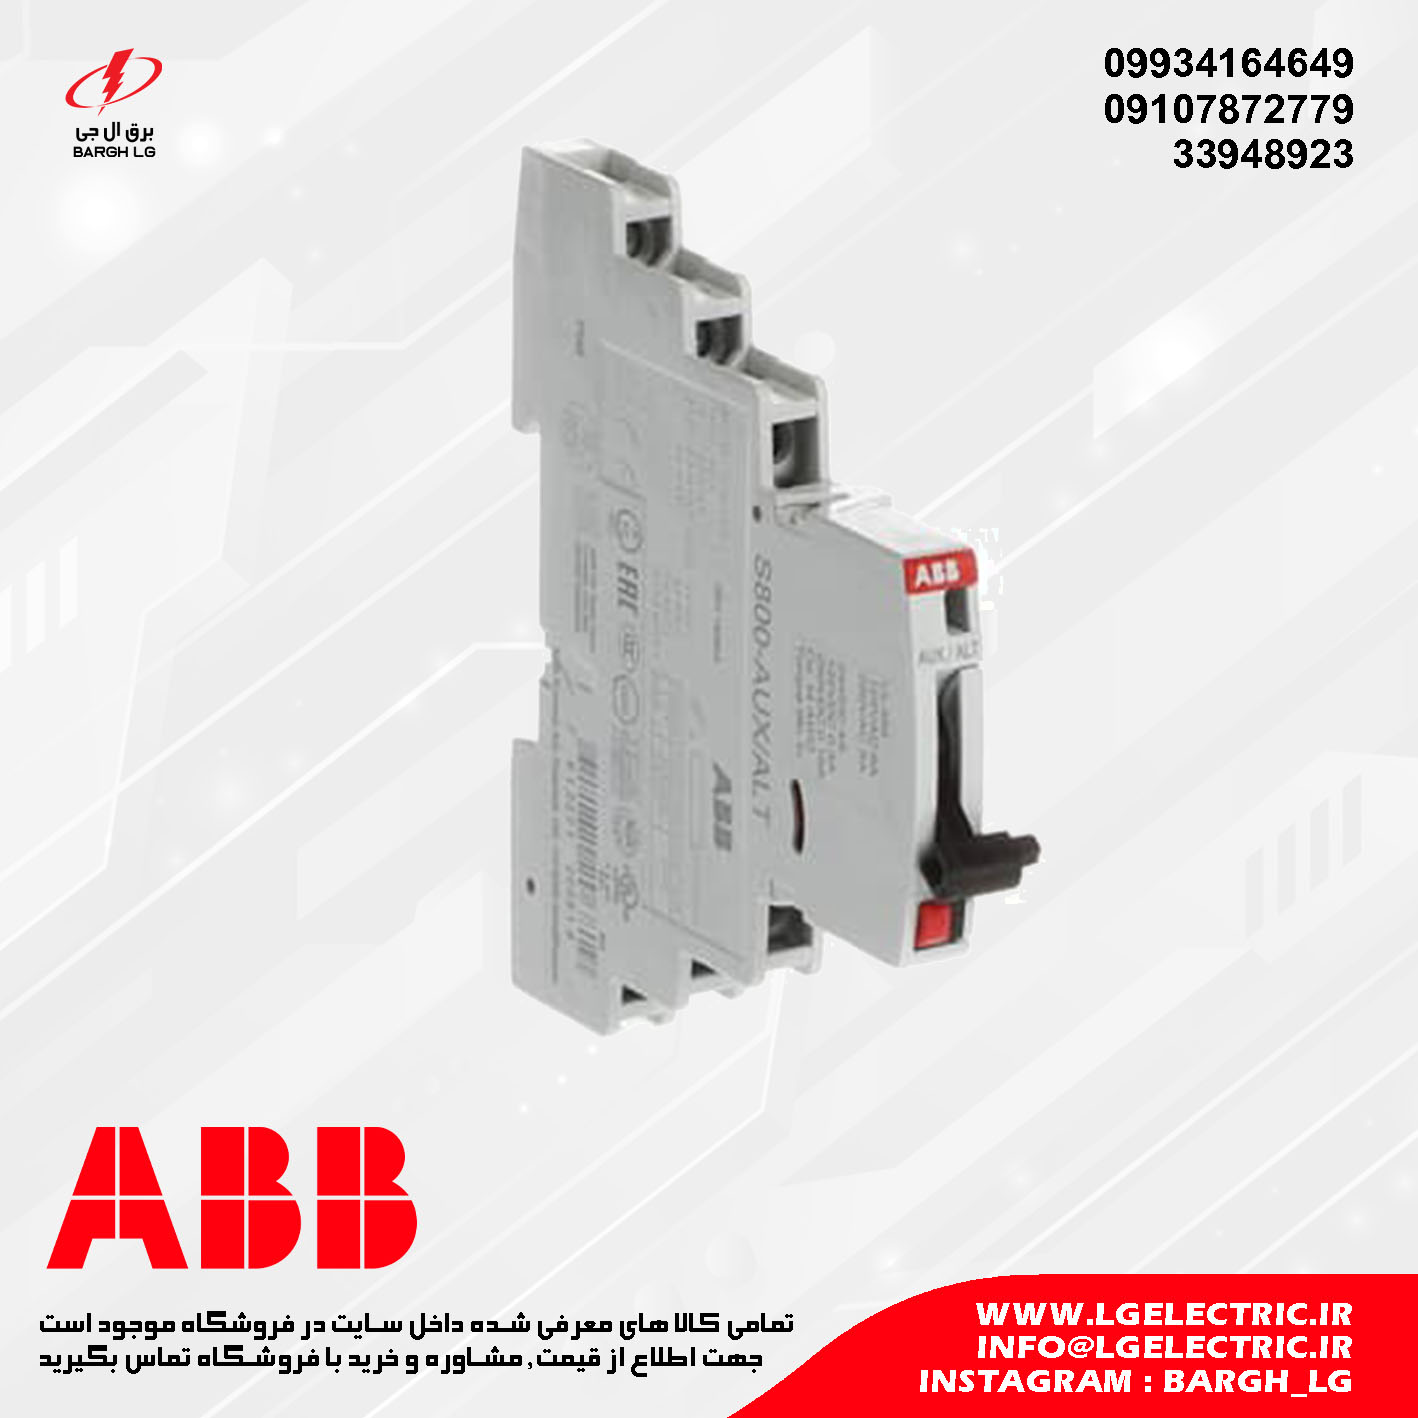 ABB S800-AUX/ALT Auxiliary / Signal Contact